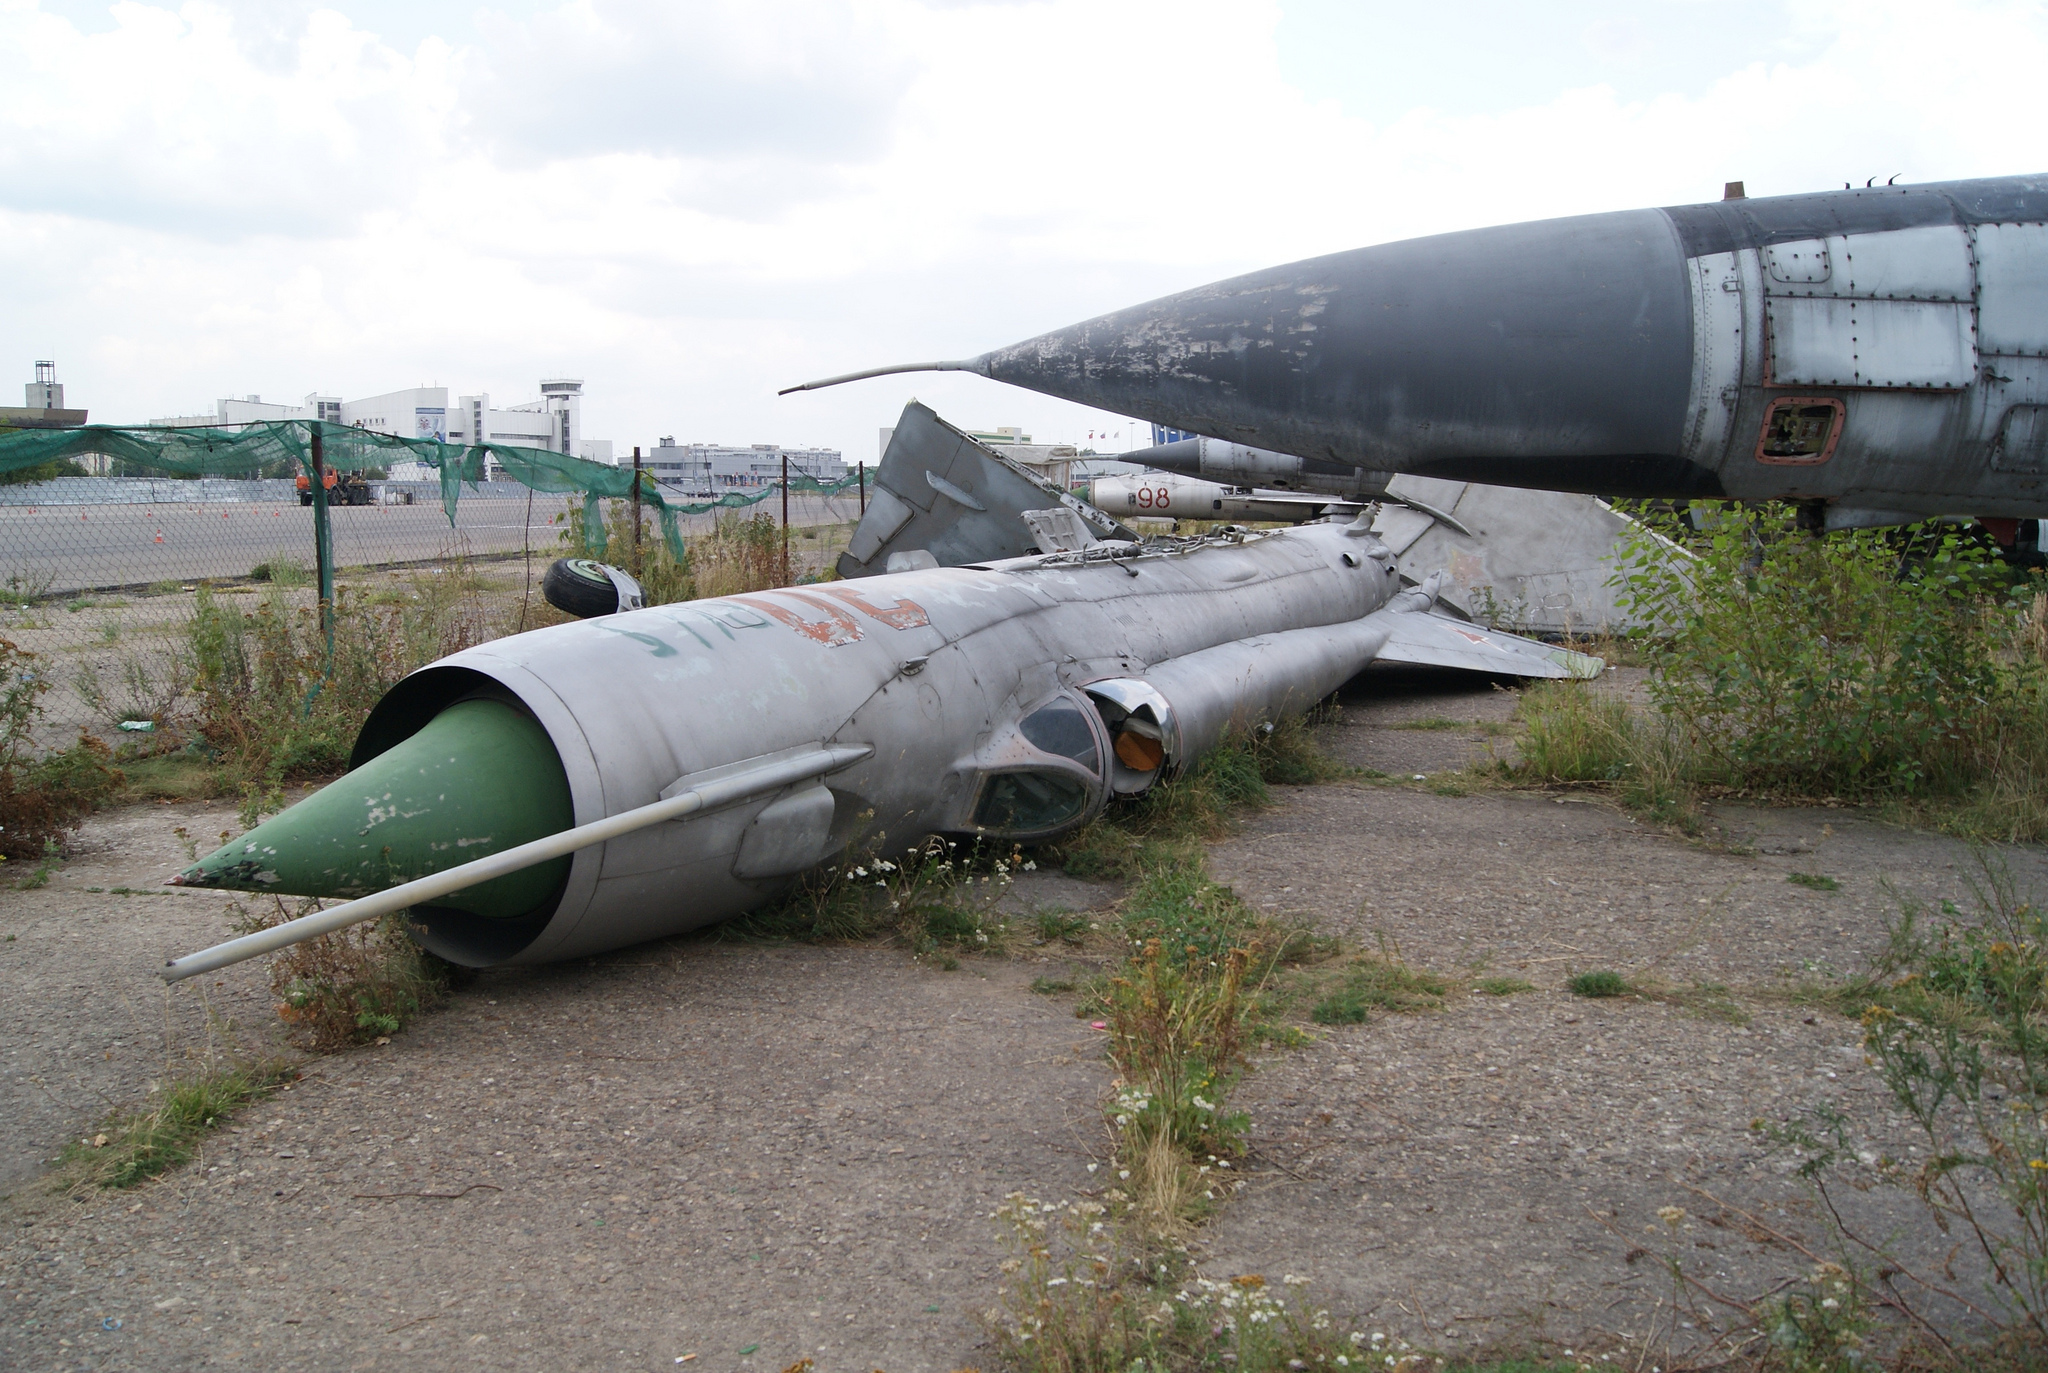 Mikoyan-Gurevich MiG-21 until recently was an intact plane. (Image Credit: Sergey Rodovnichenko, CC 3.0) 